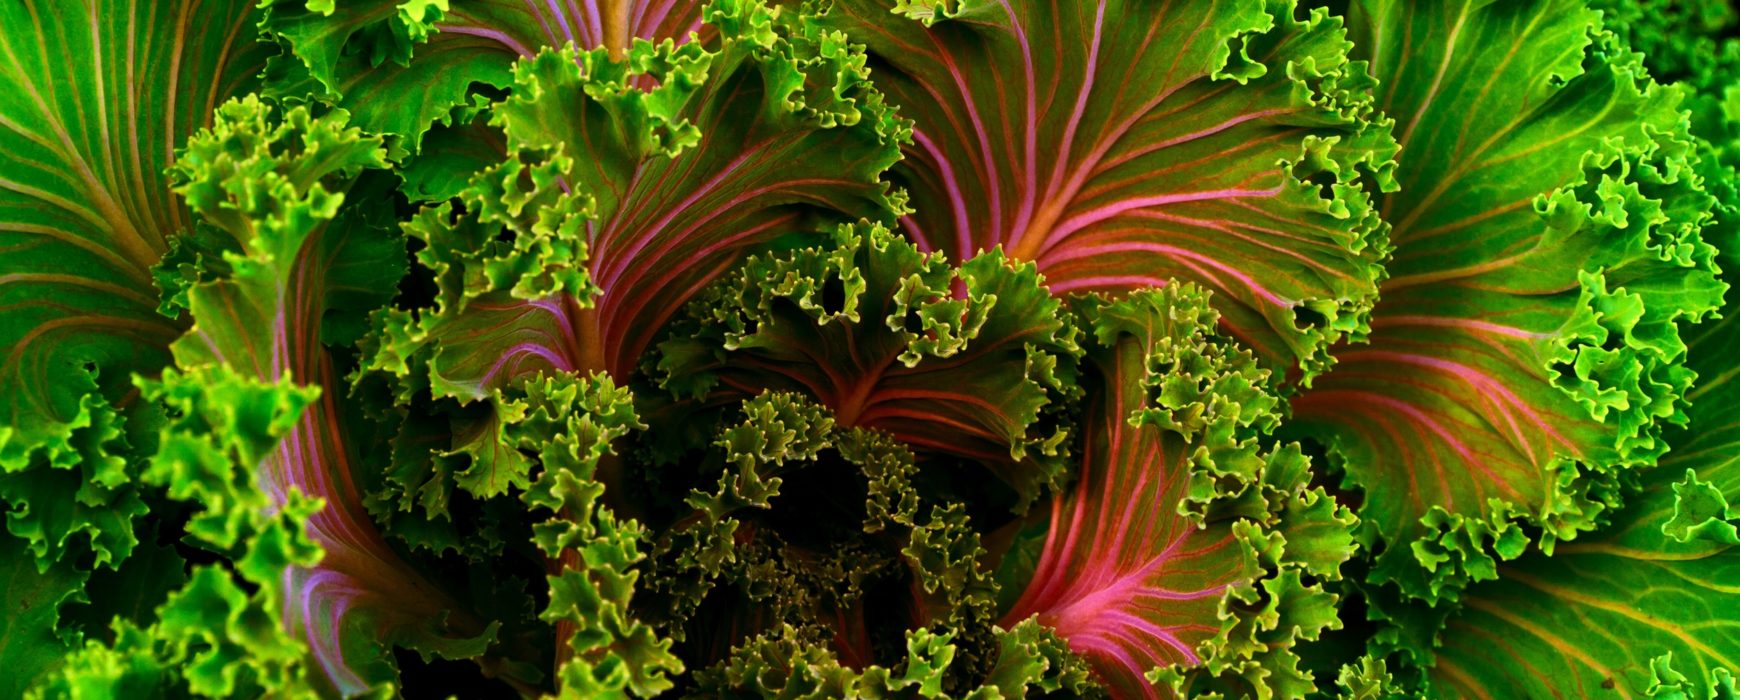 Close up on beautiful fresh salad greens